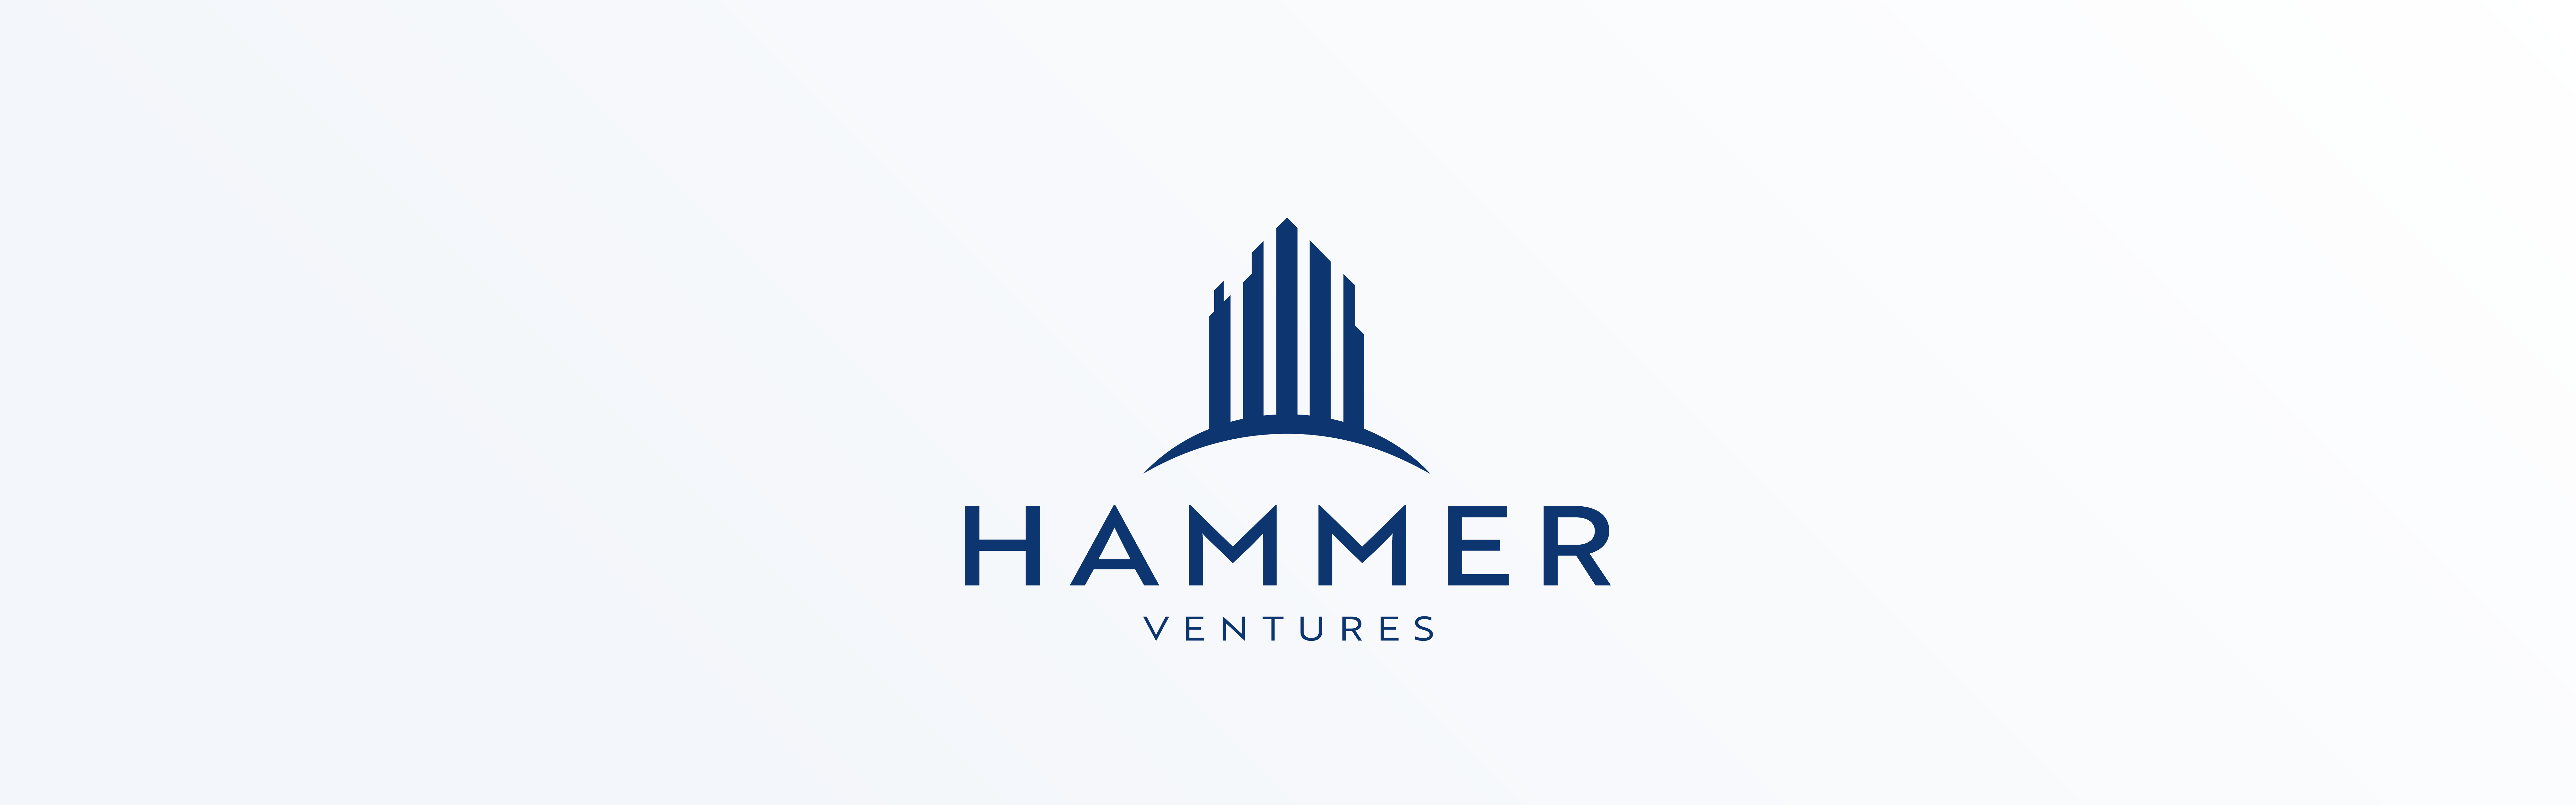 Hammer Ventures logo design